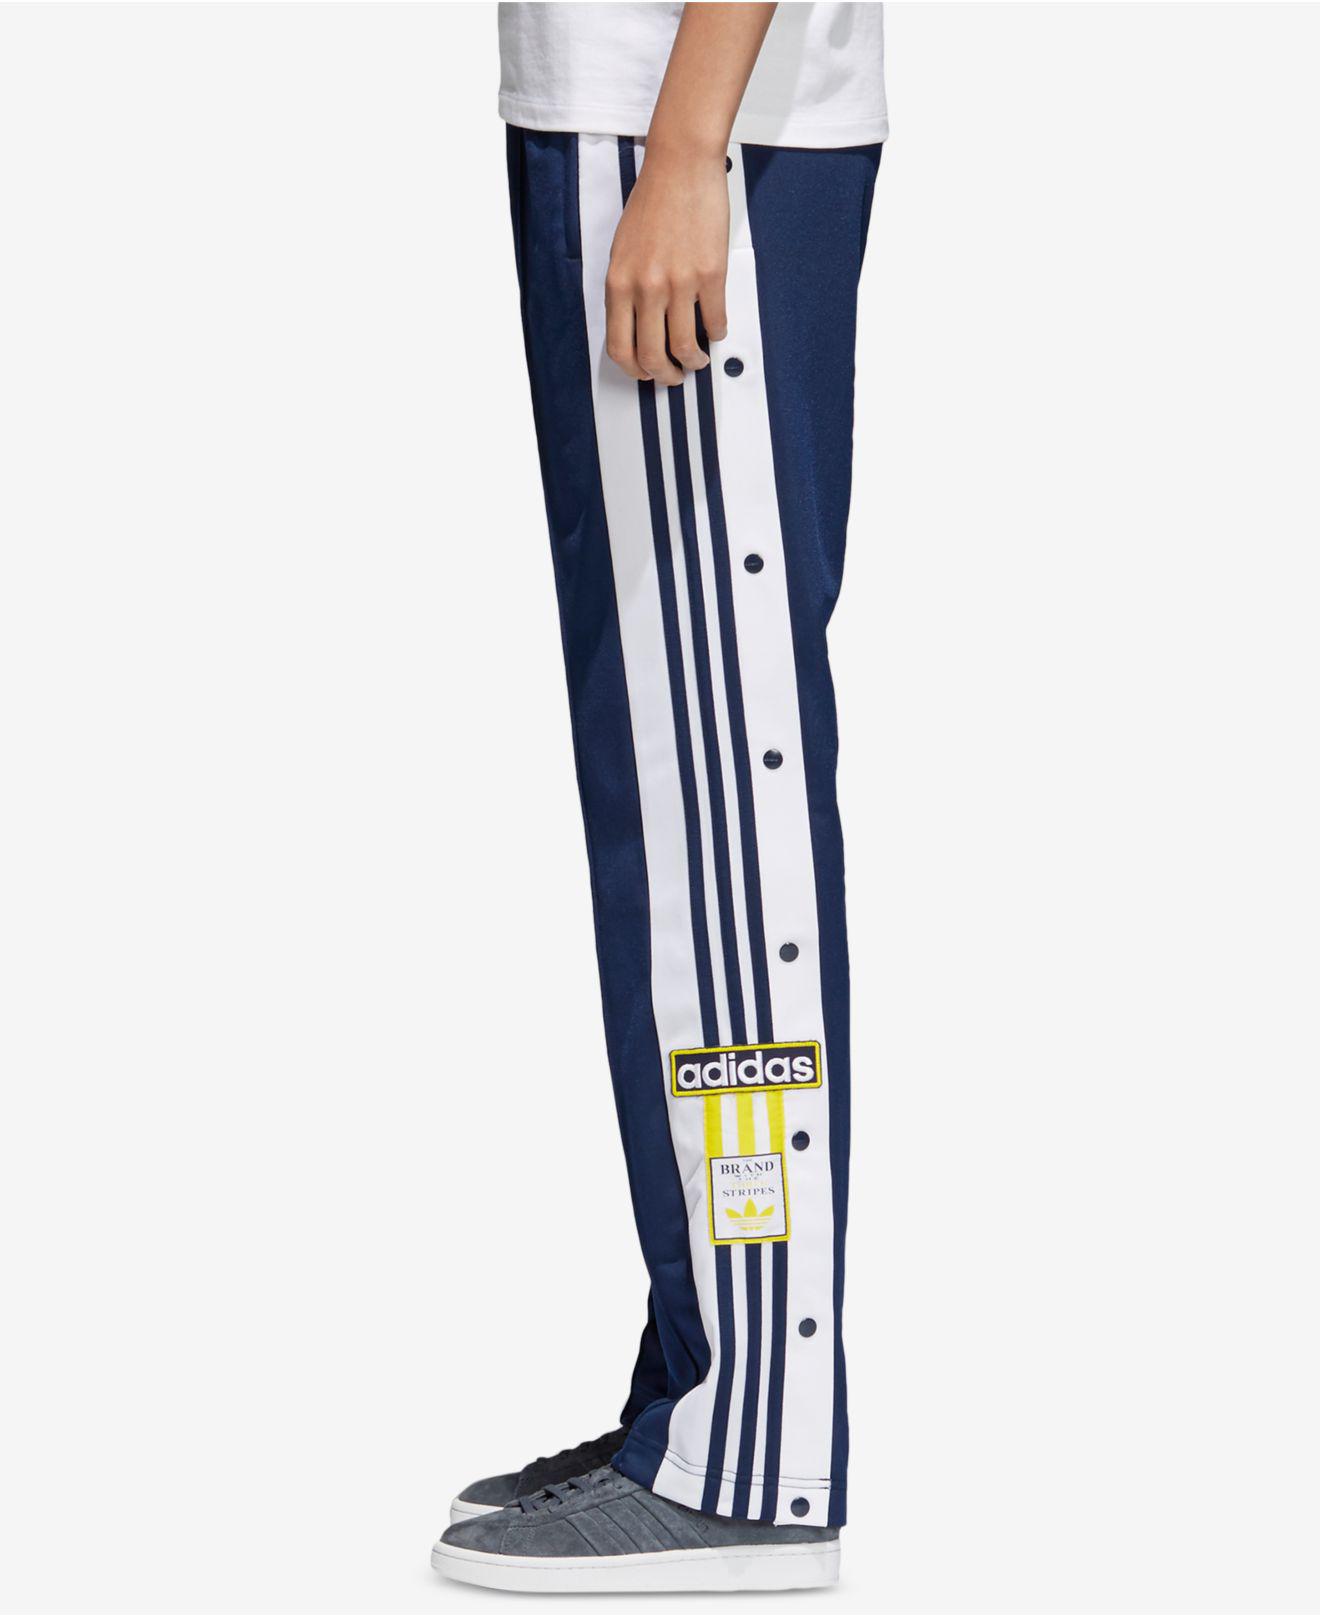 adidas brand striped pants